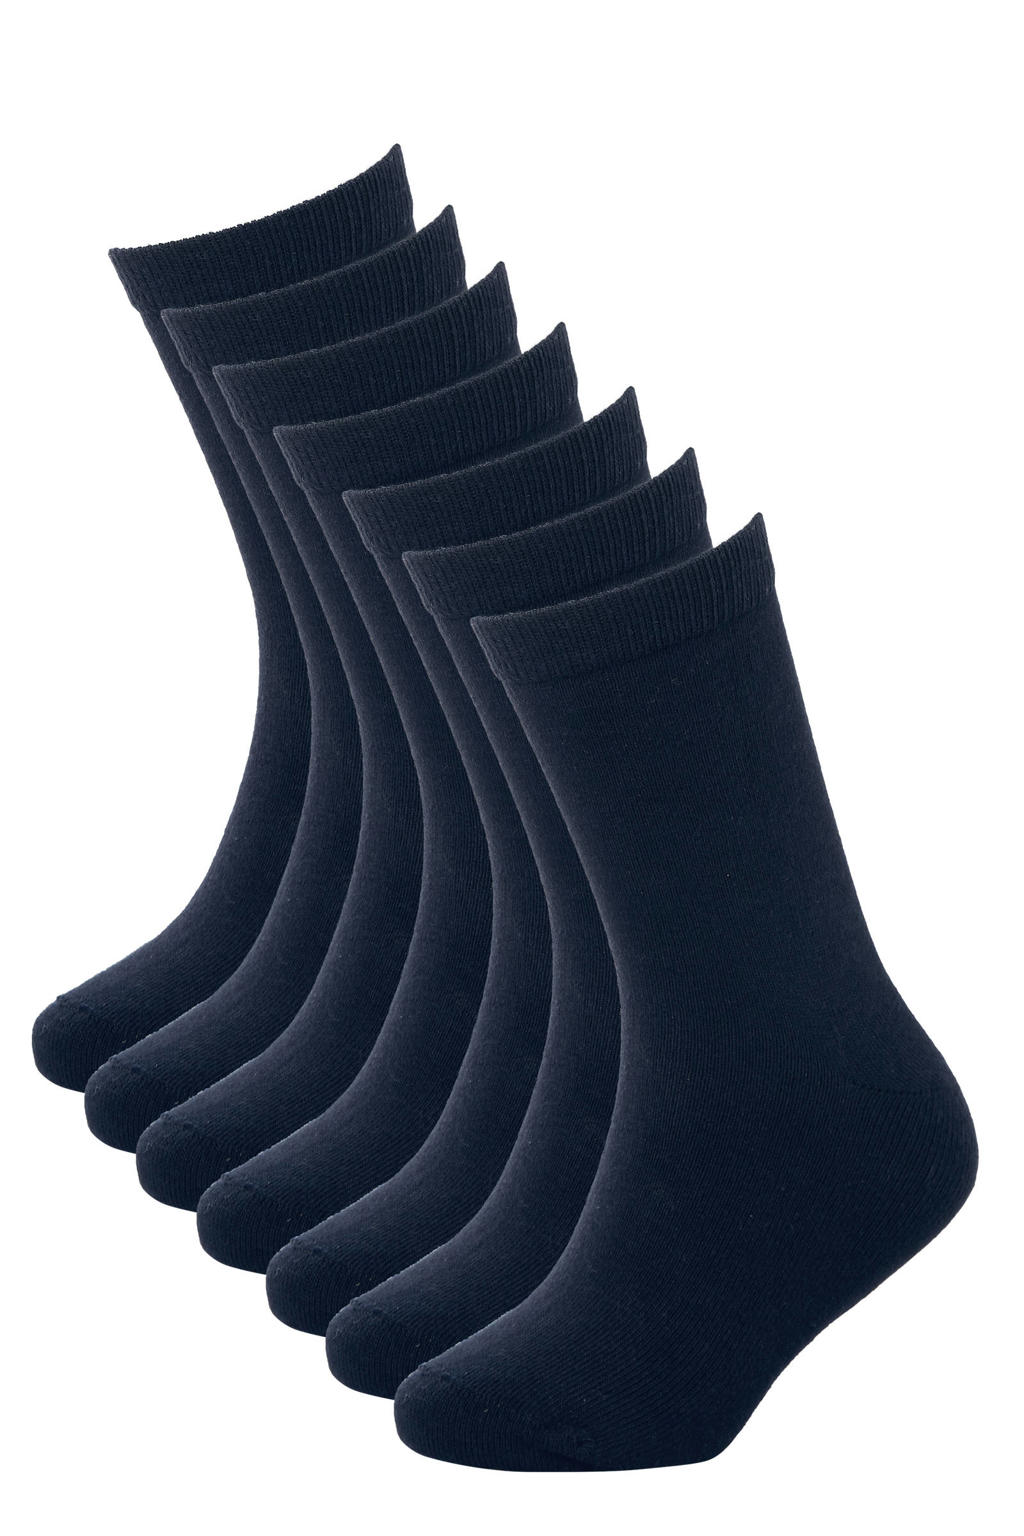 anytime sokken - set van 7 donkerblauw